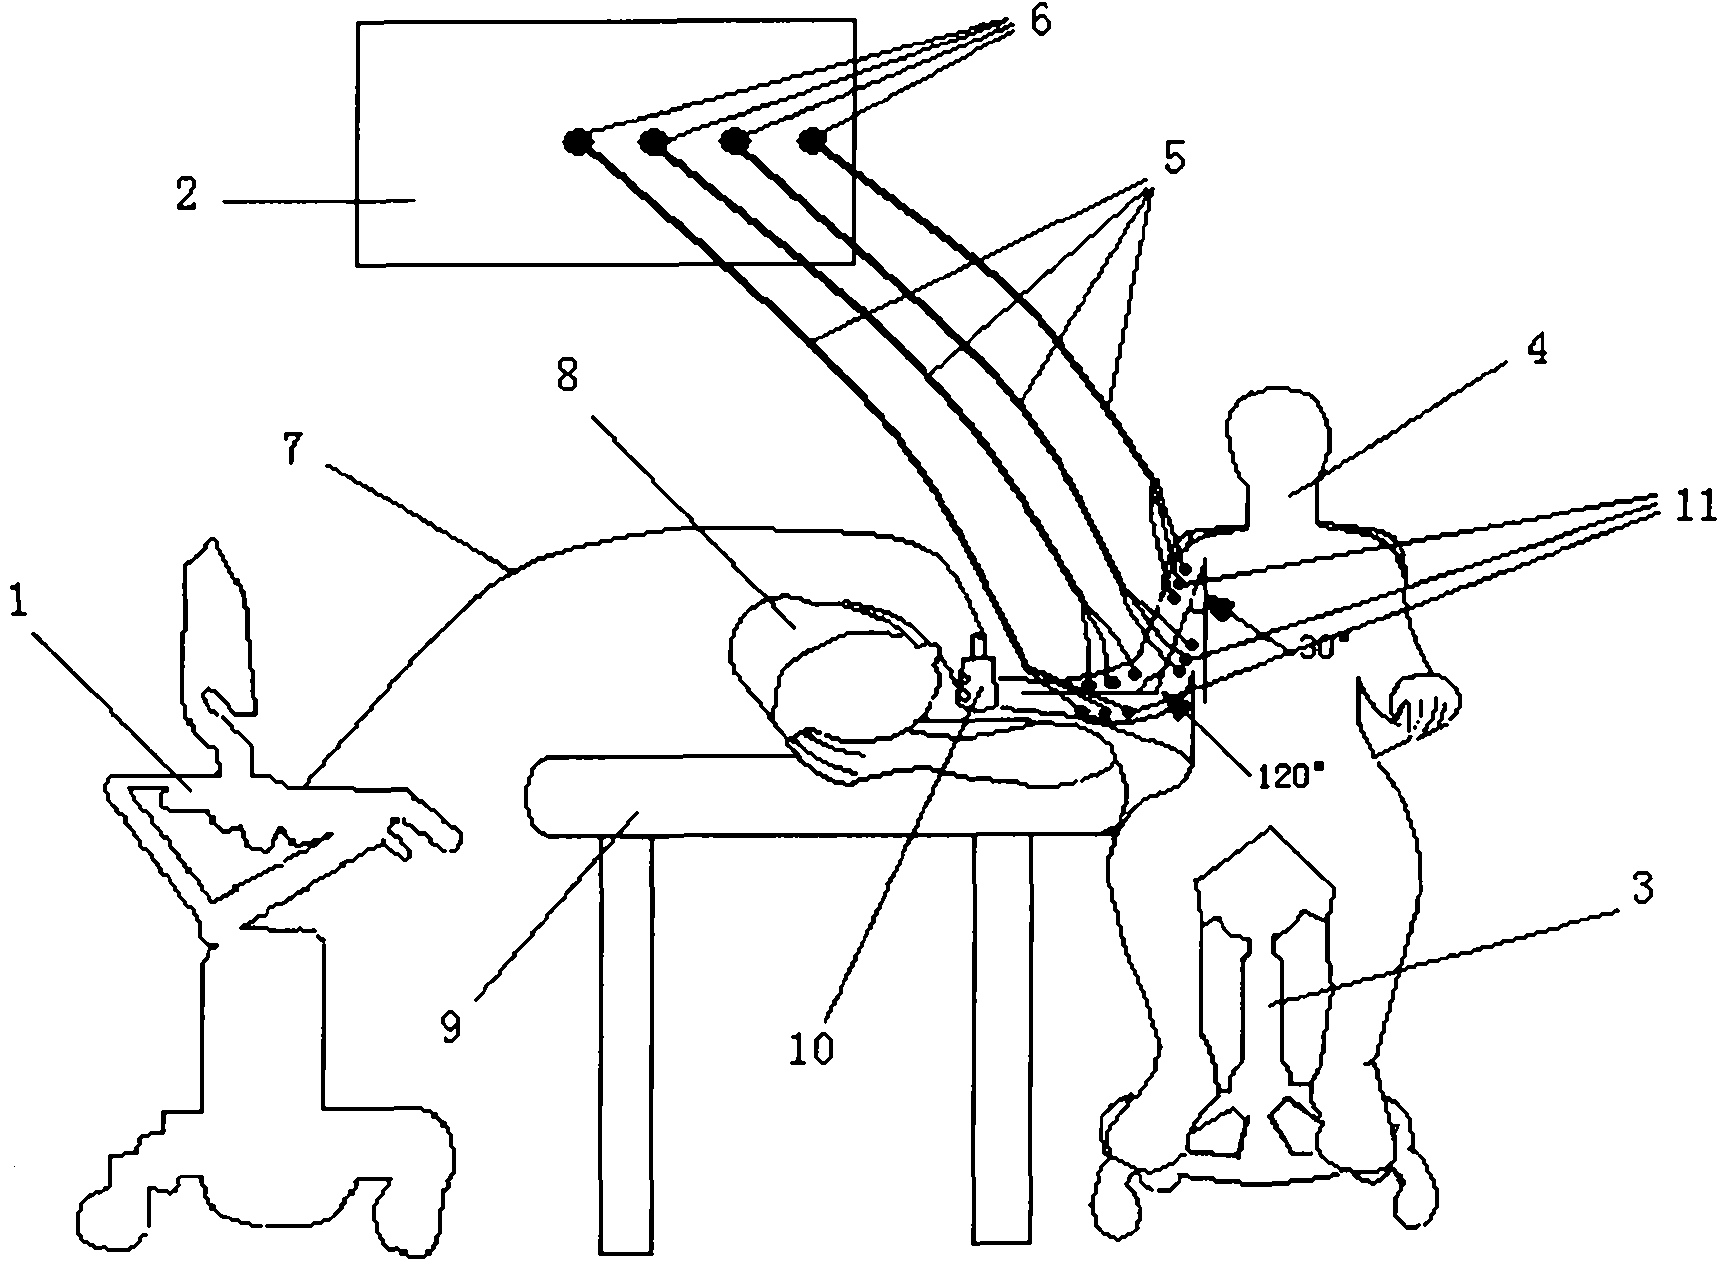 Evaluation method of ergonomics design of ultrasonic probe